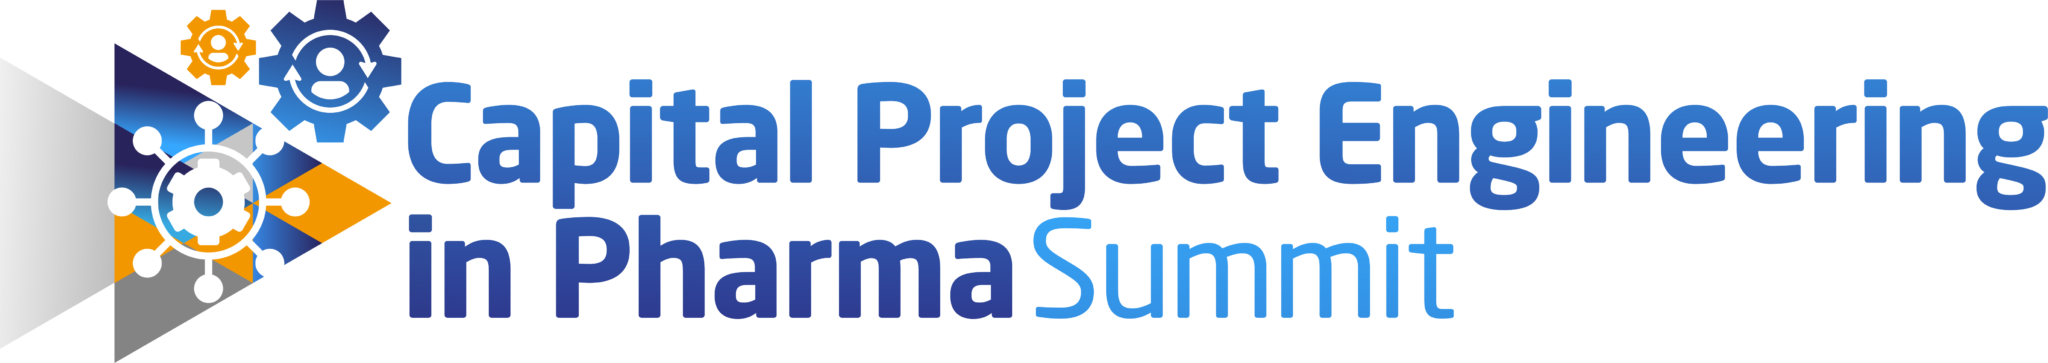 Capital-Project-Engineering-in-Pharma-Summit-logo-2048x363